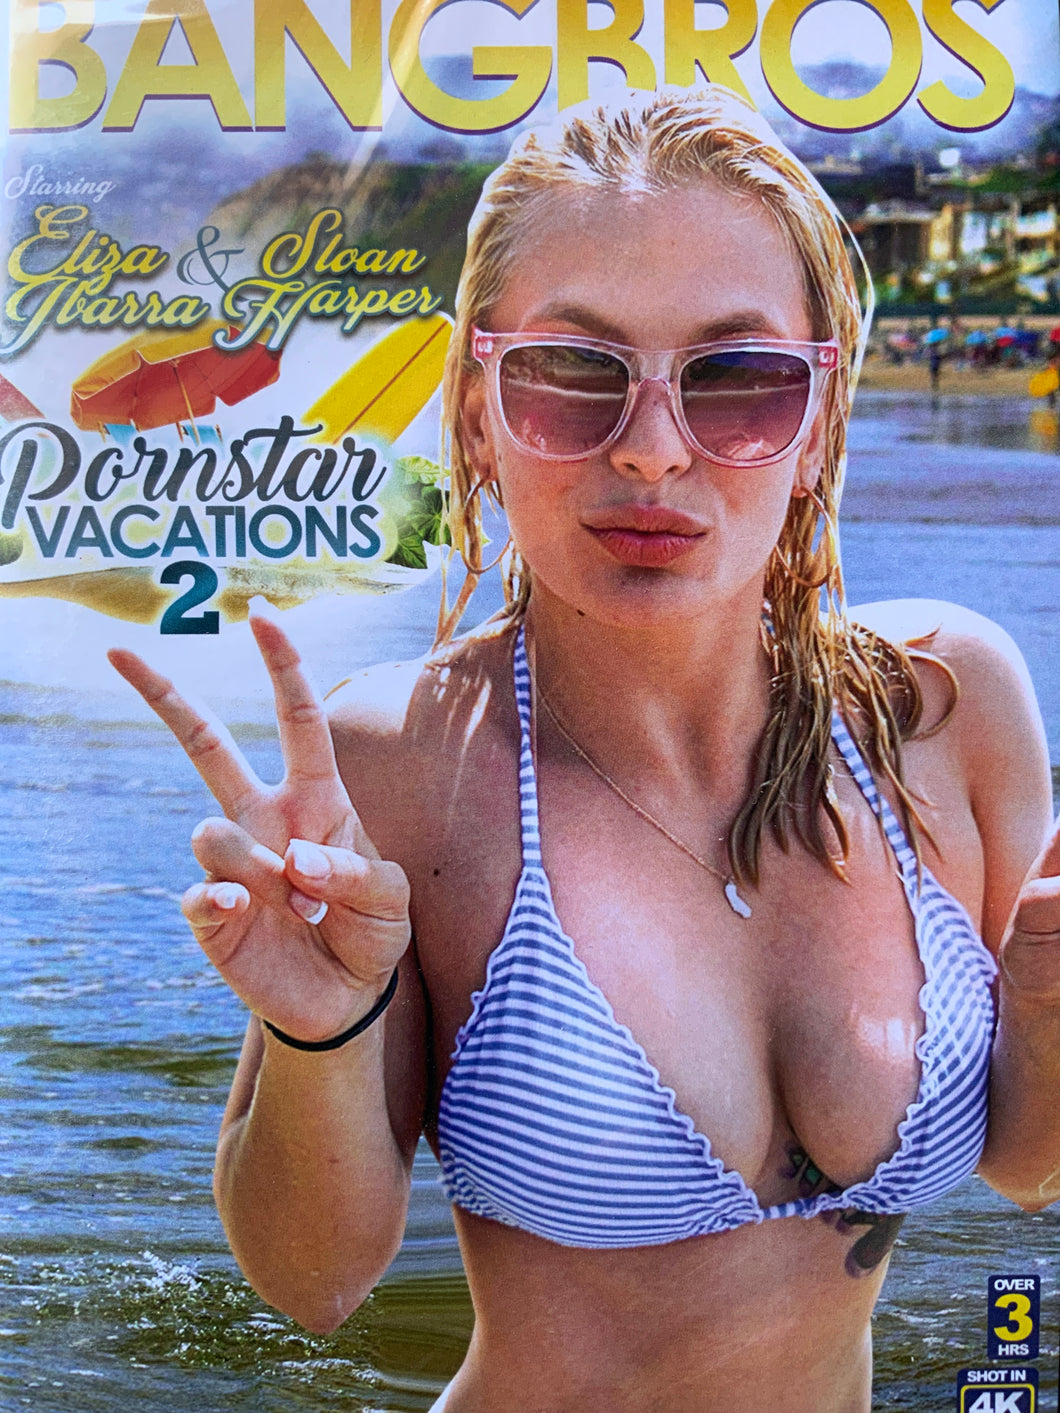 Bang Bros. Pornstar Vacations 2